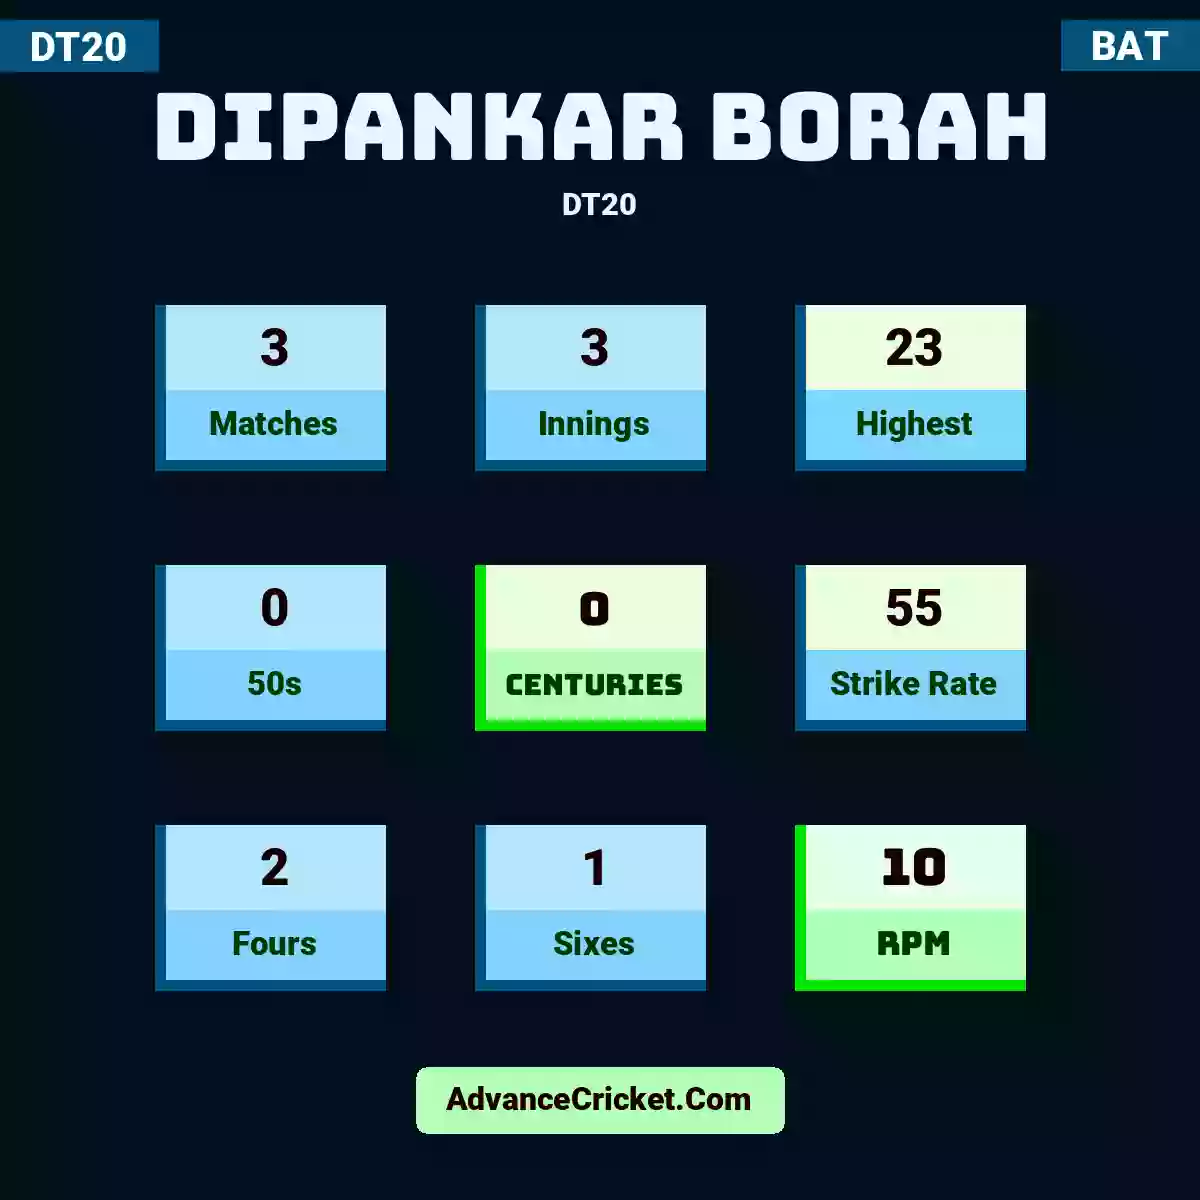 Dipankar Borah DT20 , Dipankar Borah played 3 matches, scored 23 runs as highest, 0 half-centuries, and 0 centuries, with a strike rate of 55. d.borah hit 2 fours and 1 sixes, with an RPM of 10.